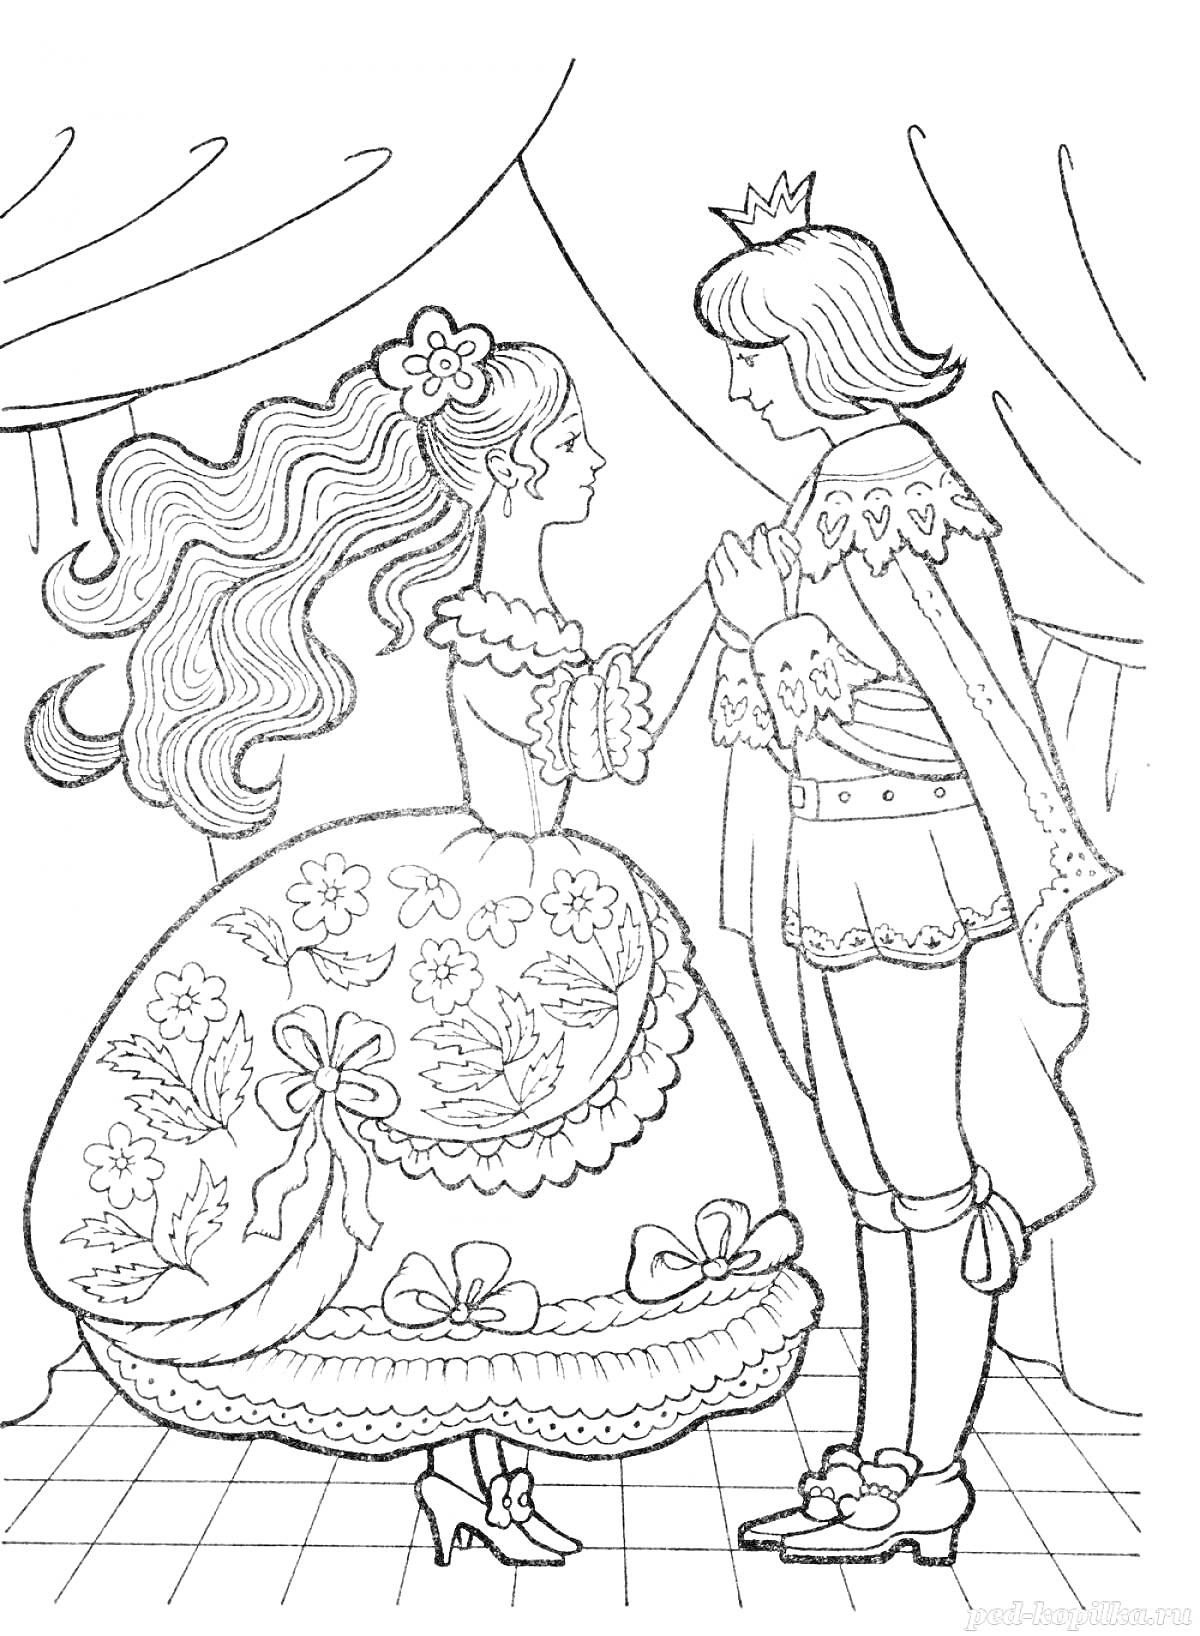 Раскраска Принц и принцесса на балу, стоящие на клетчатом полу, фон с занавесами